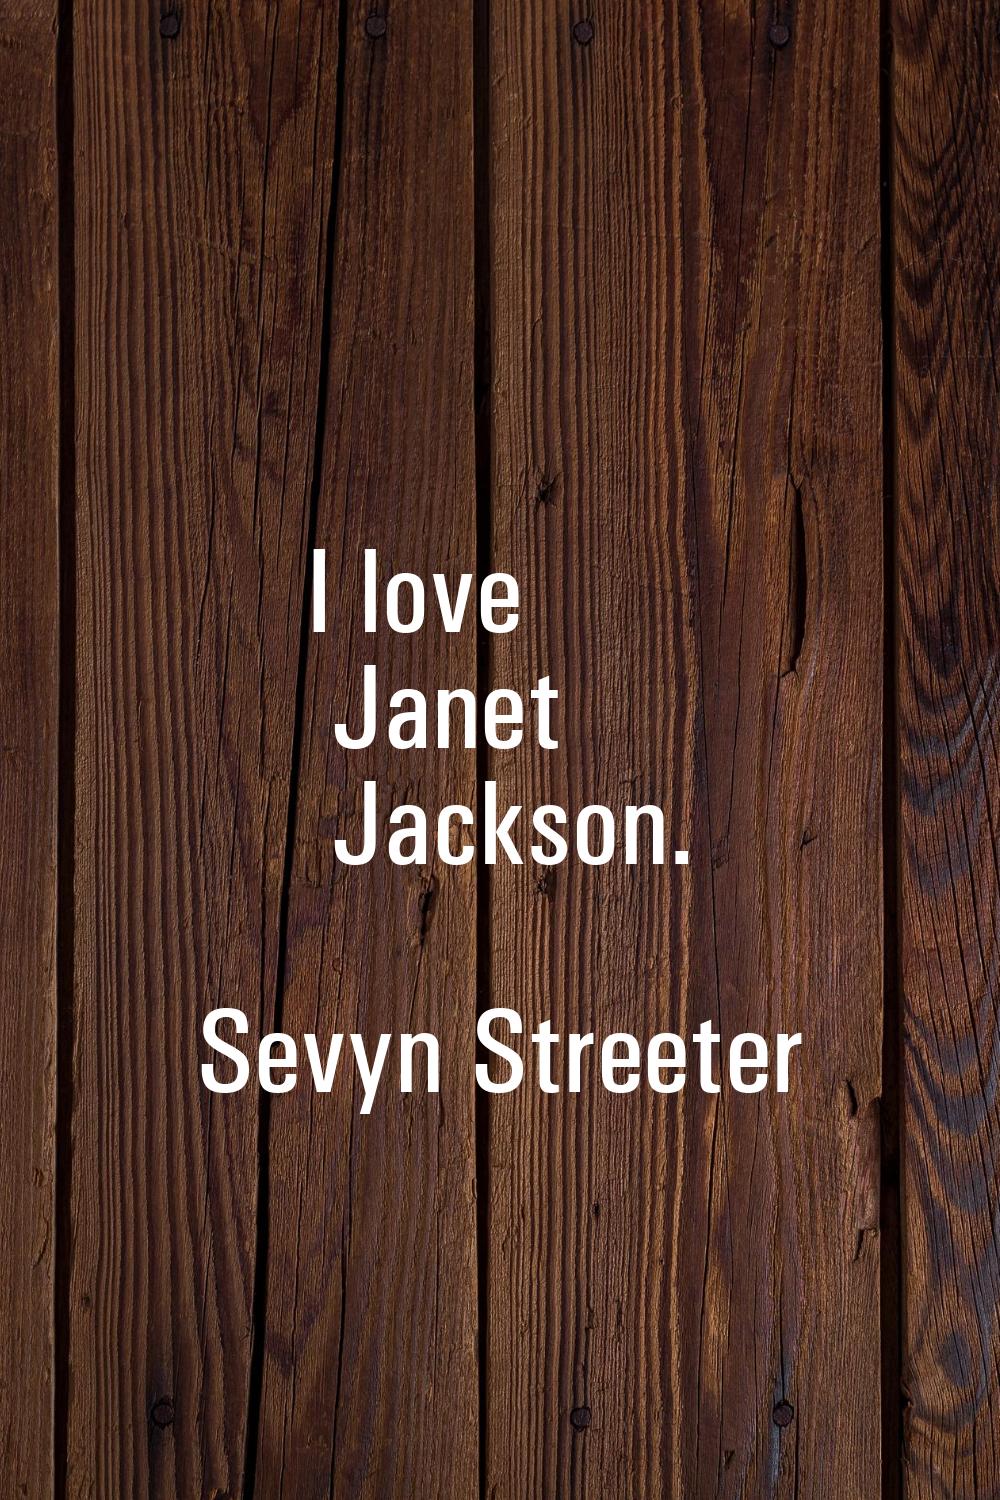 I love Janet Jackson.